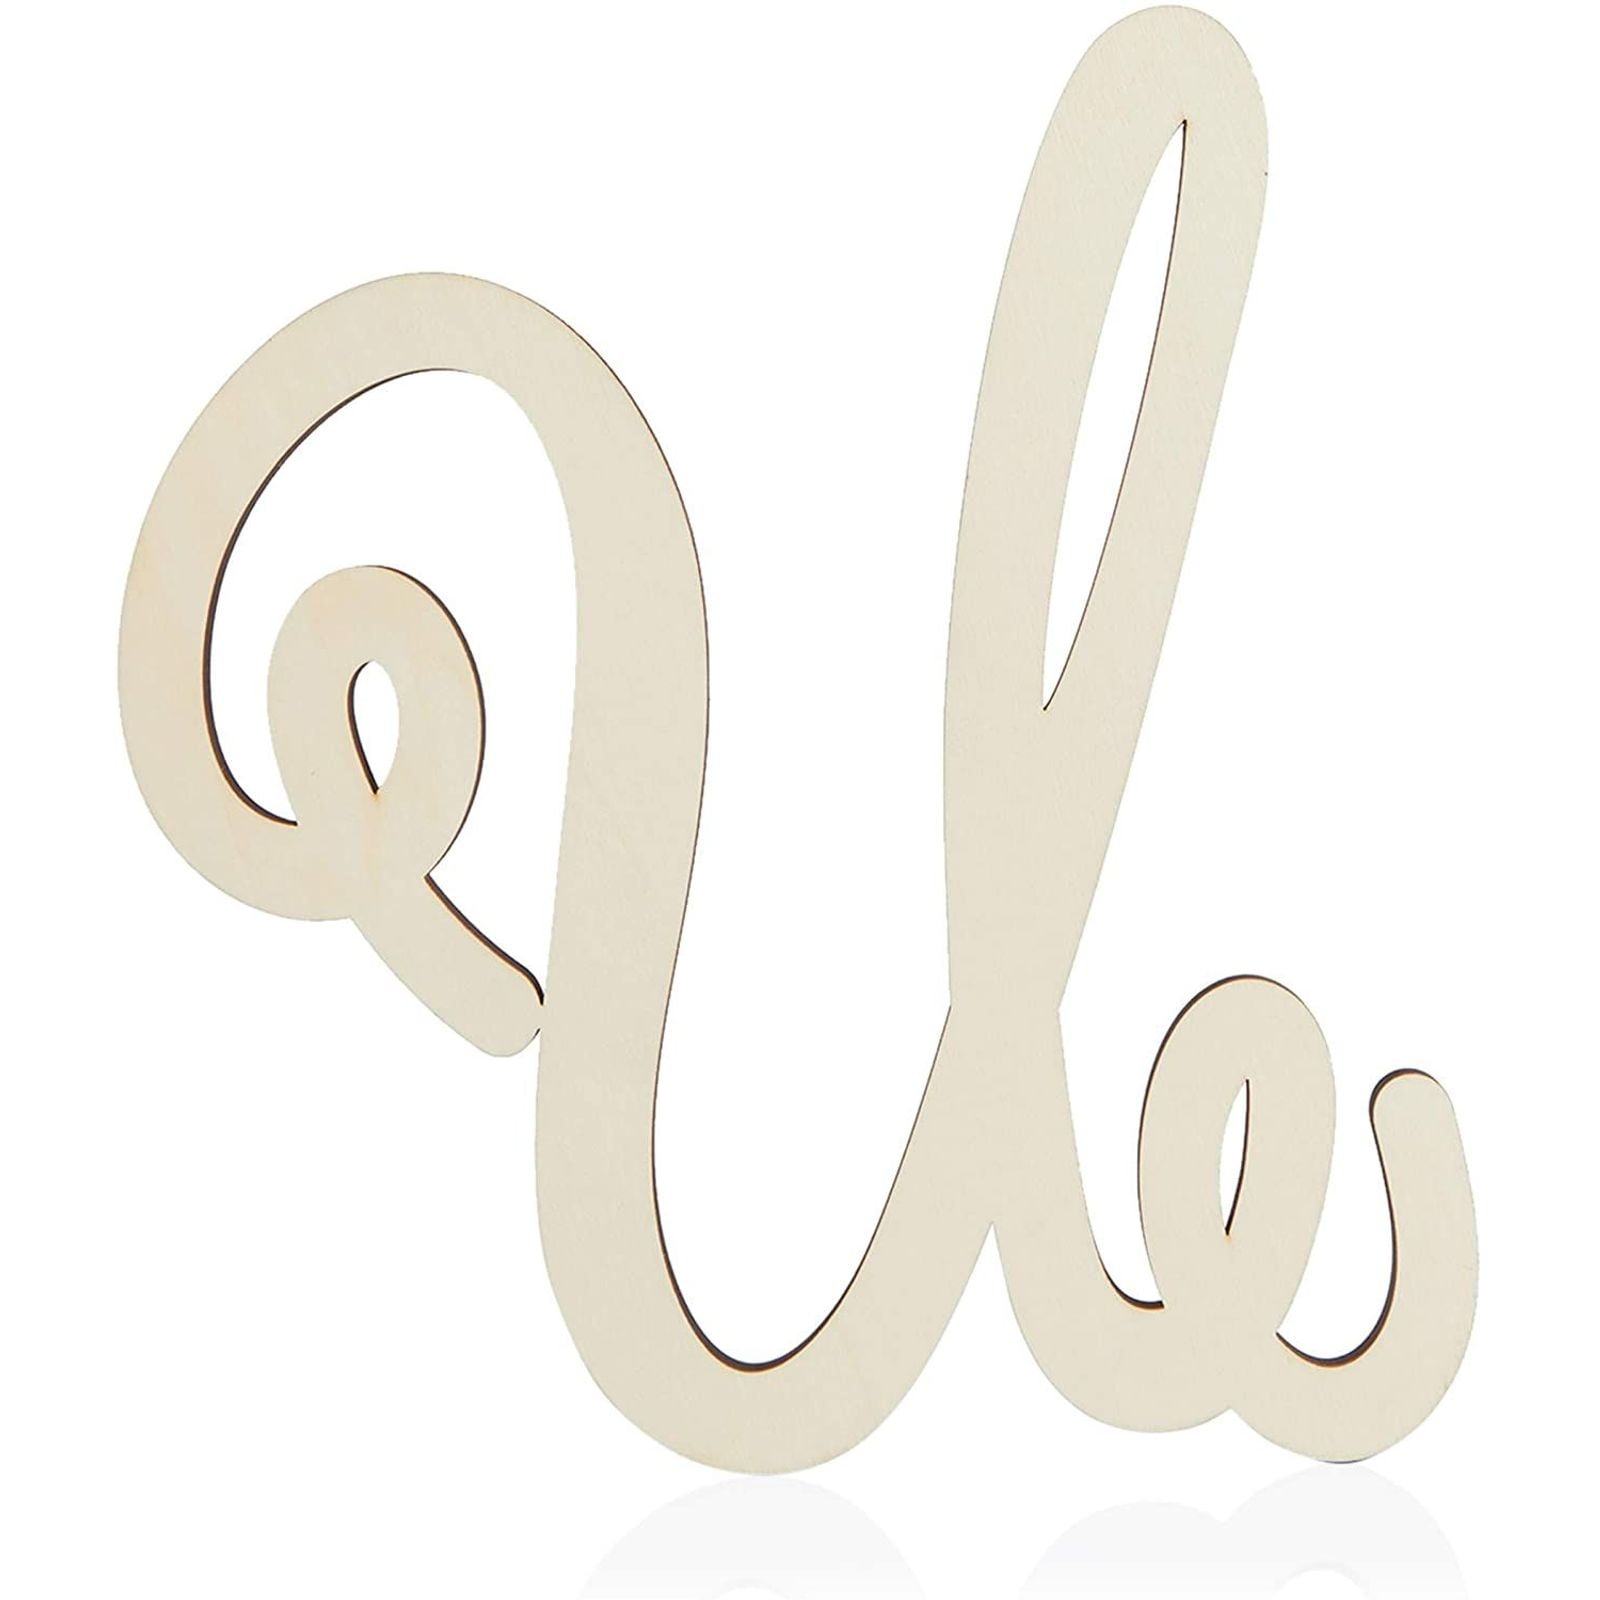 Wooden Monogram Alphabet Letters Decorative Letter A 13 Inches 